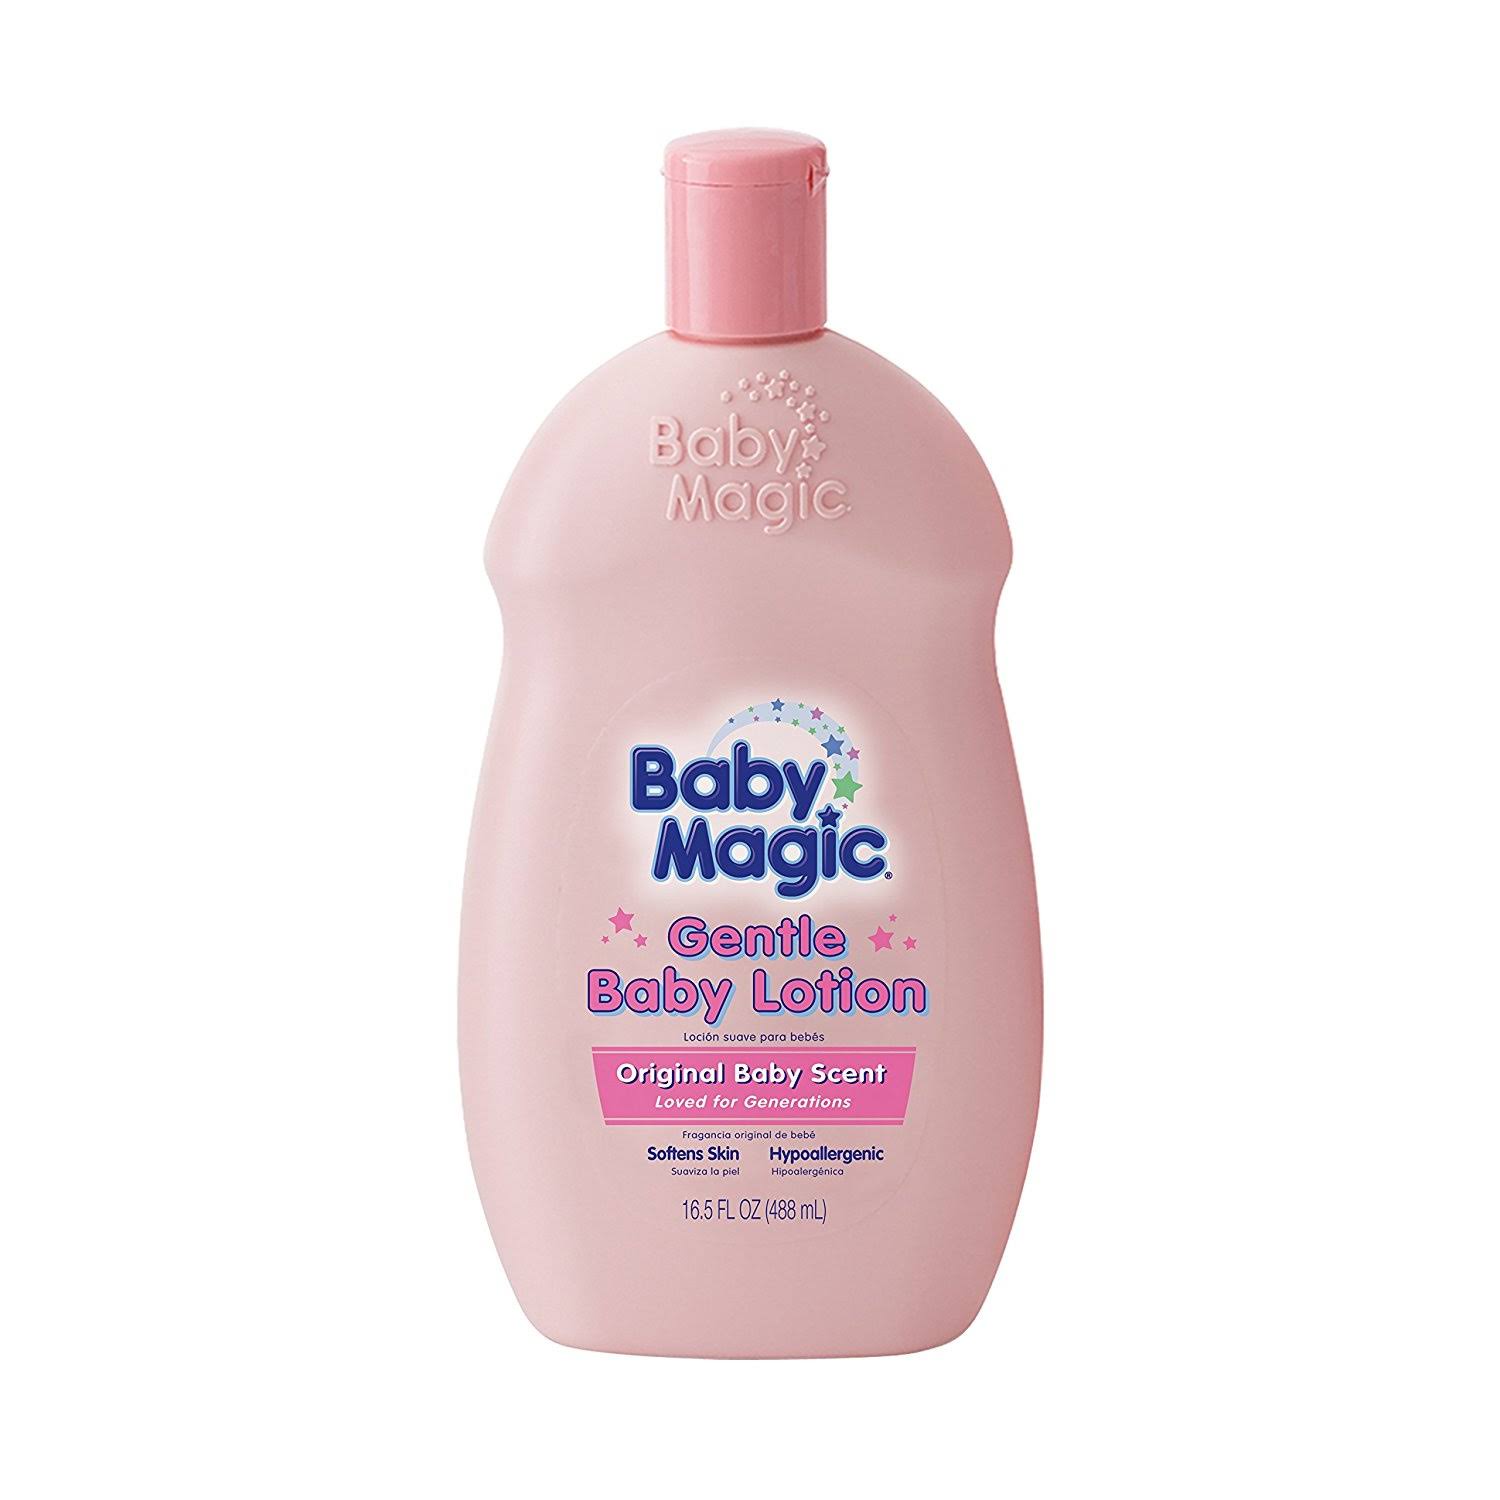 Baby Magic Gentle Baby Lotion - Original Baby Scent, 16.5oz